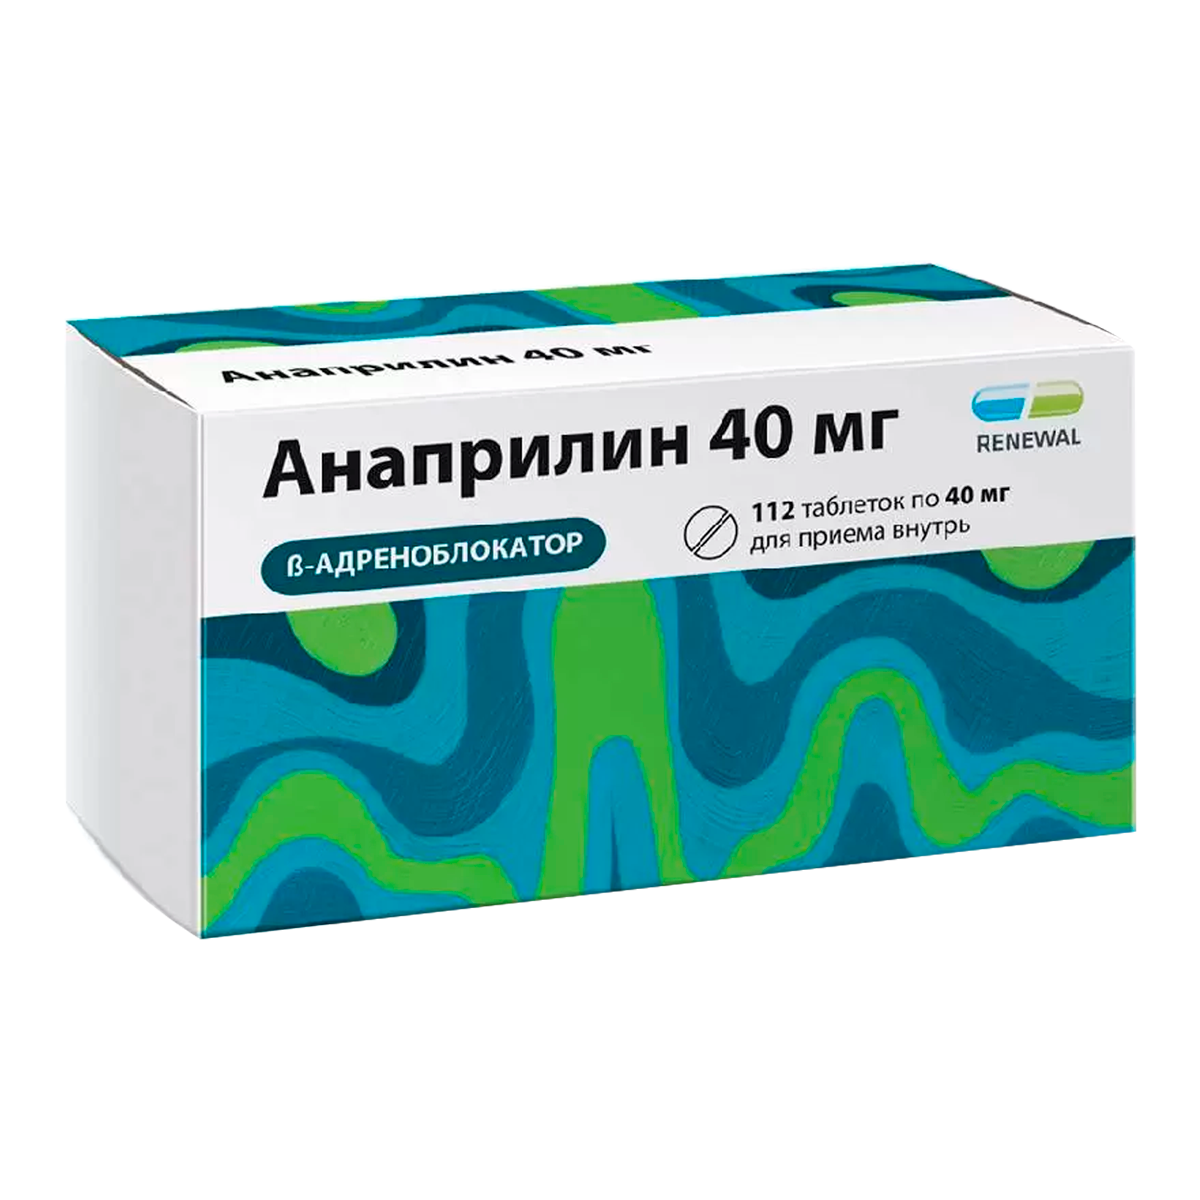 Анаприлин отзывы. Анаприлин реневал 10 мг. Таблетки анаприлин реневал. Анаприлин 40 реневал. Анаприлин таблетки 10 мг.